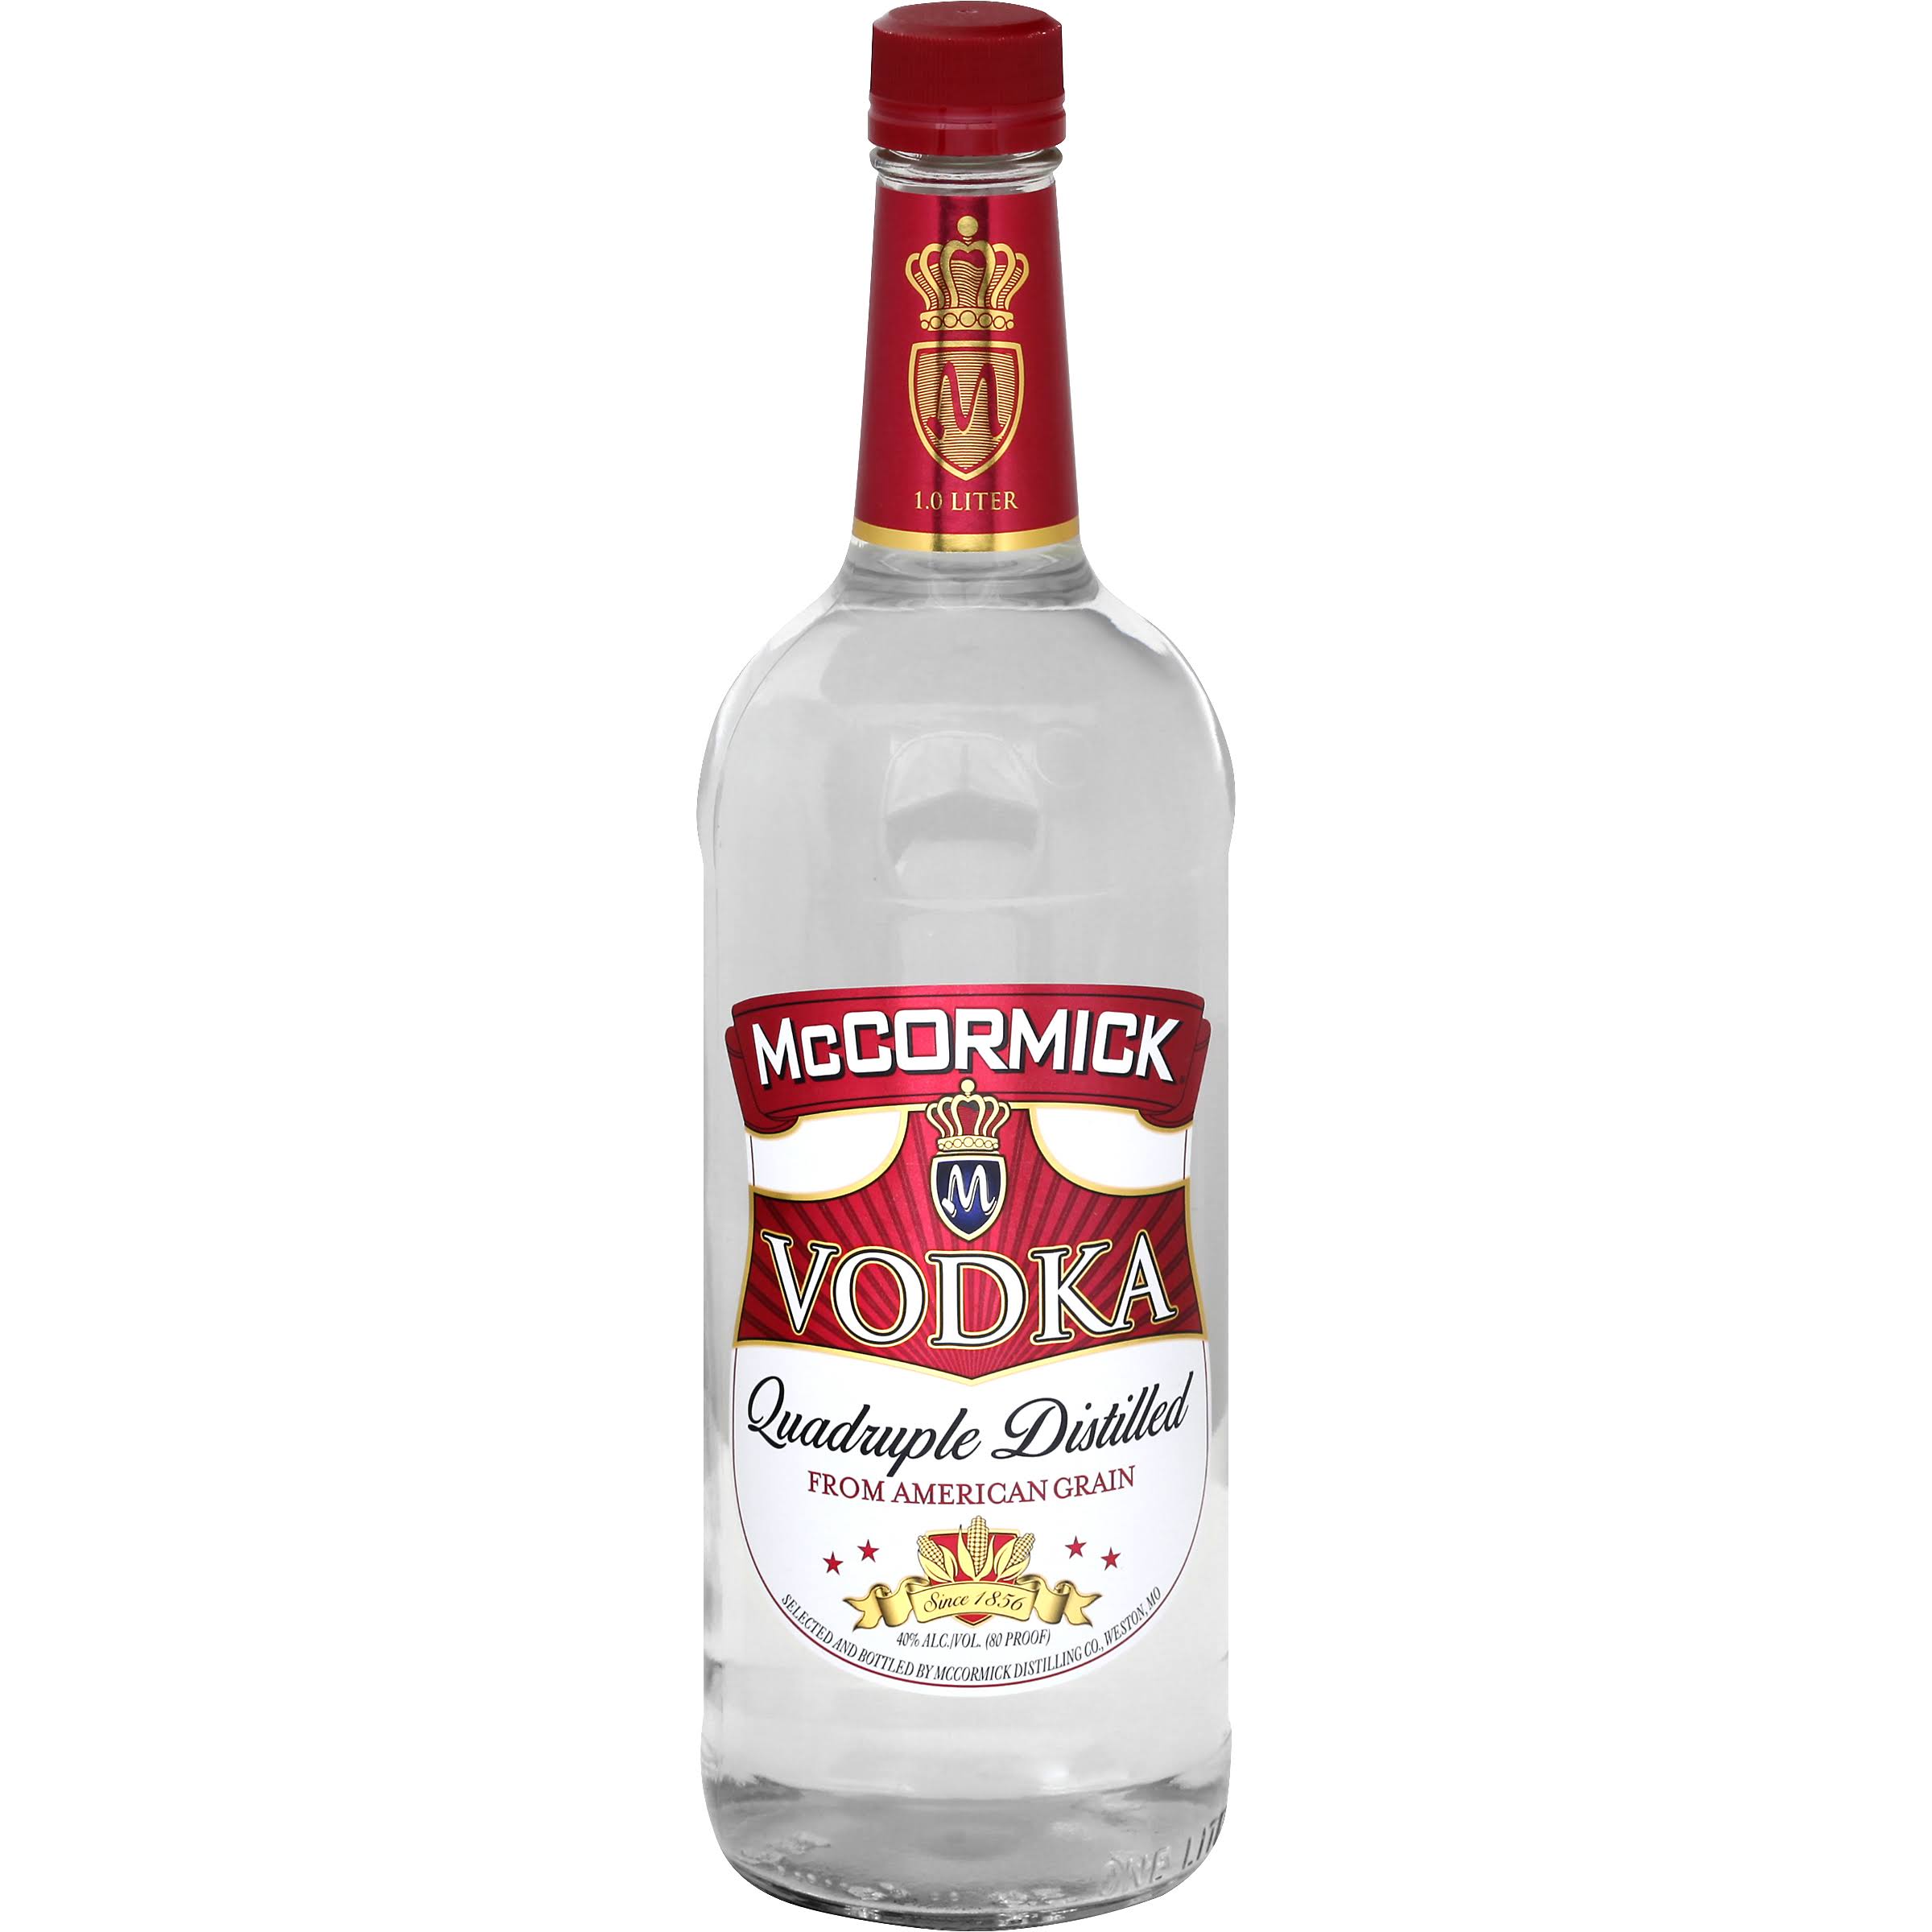 McCormick - Vodka (1 Liter)